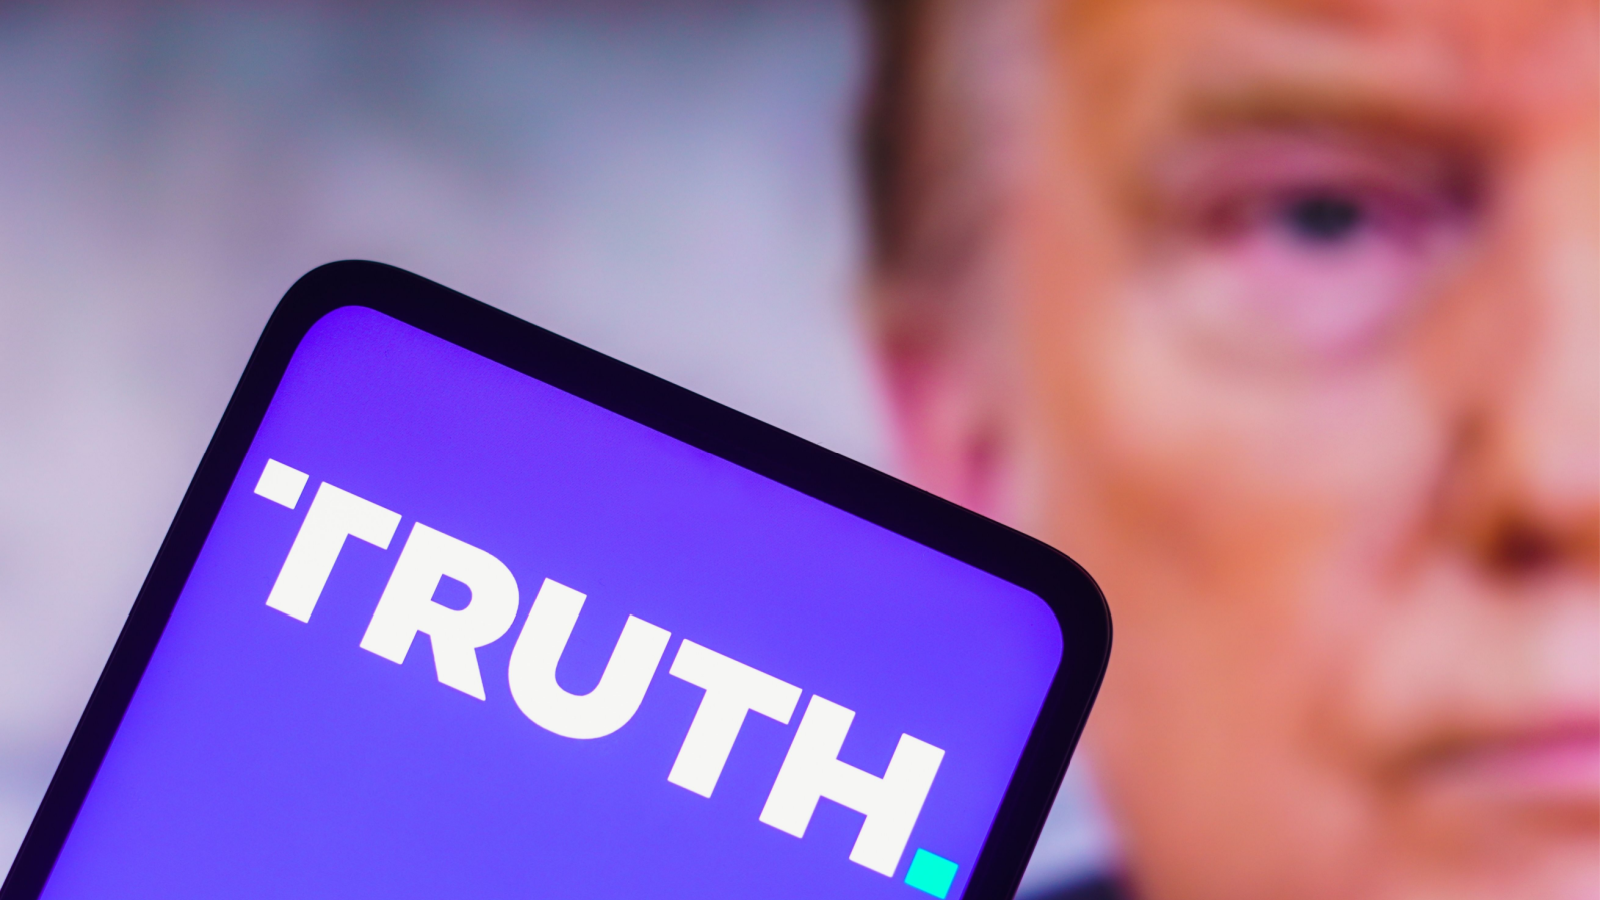 DJT Stock Alert: Truth Social Keeps Losing Users